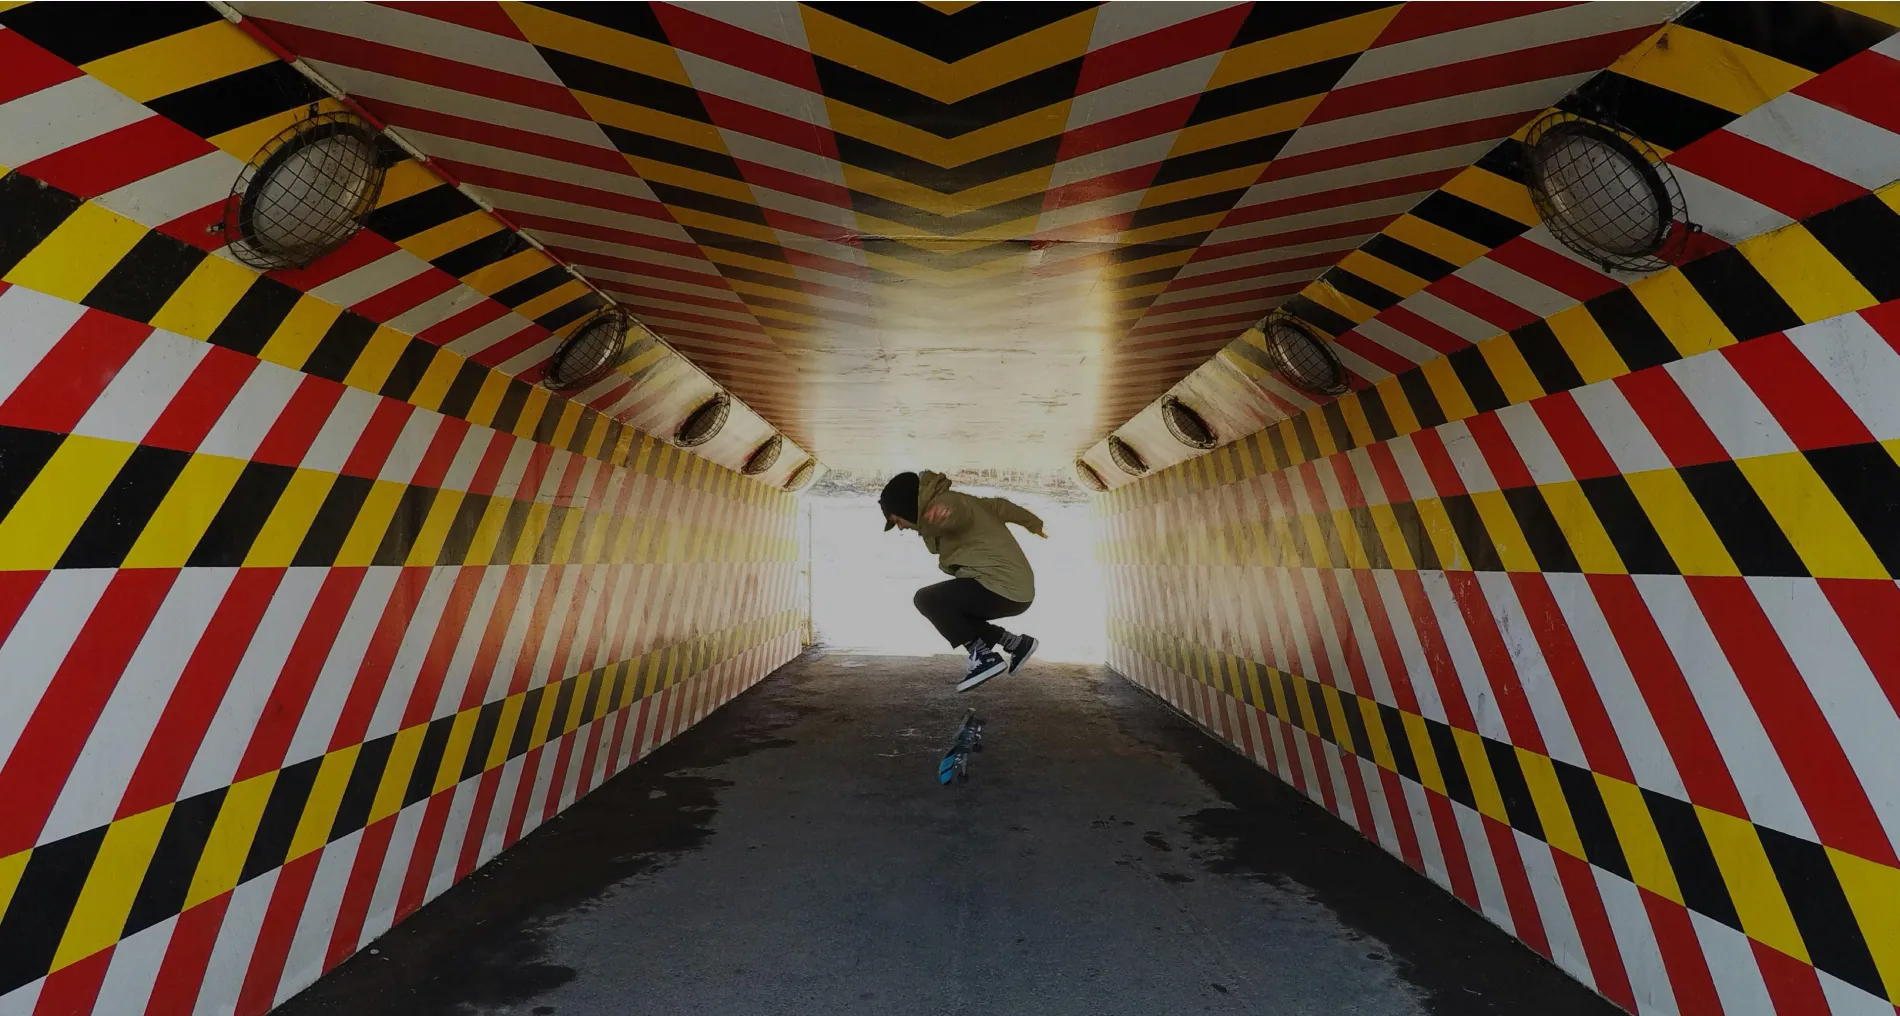 Skate boarding through a tunnel